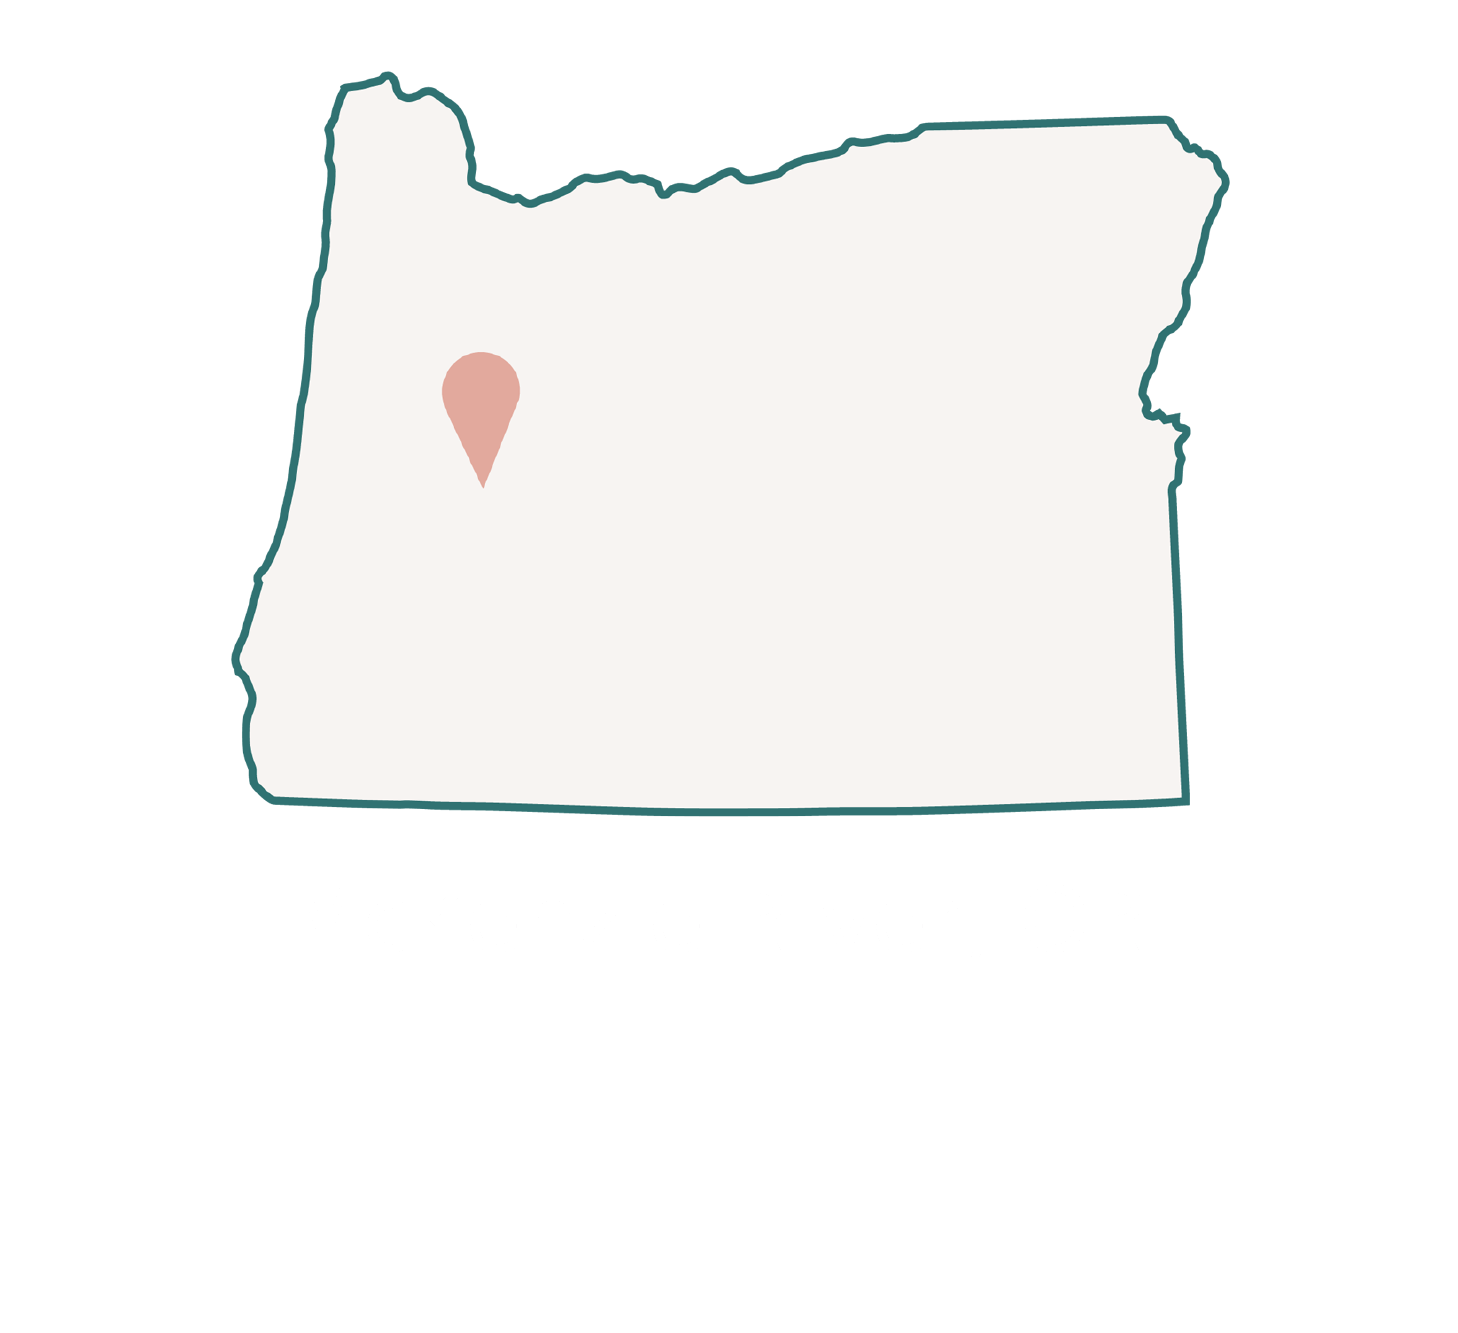 McKenzie River, OR